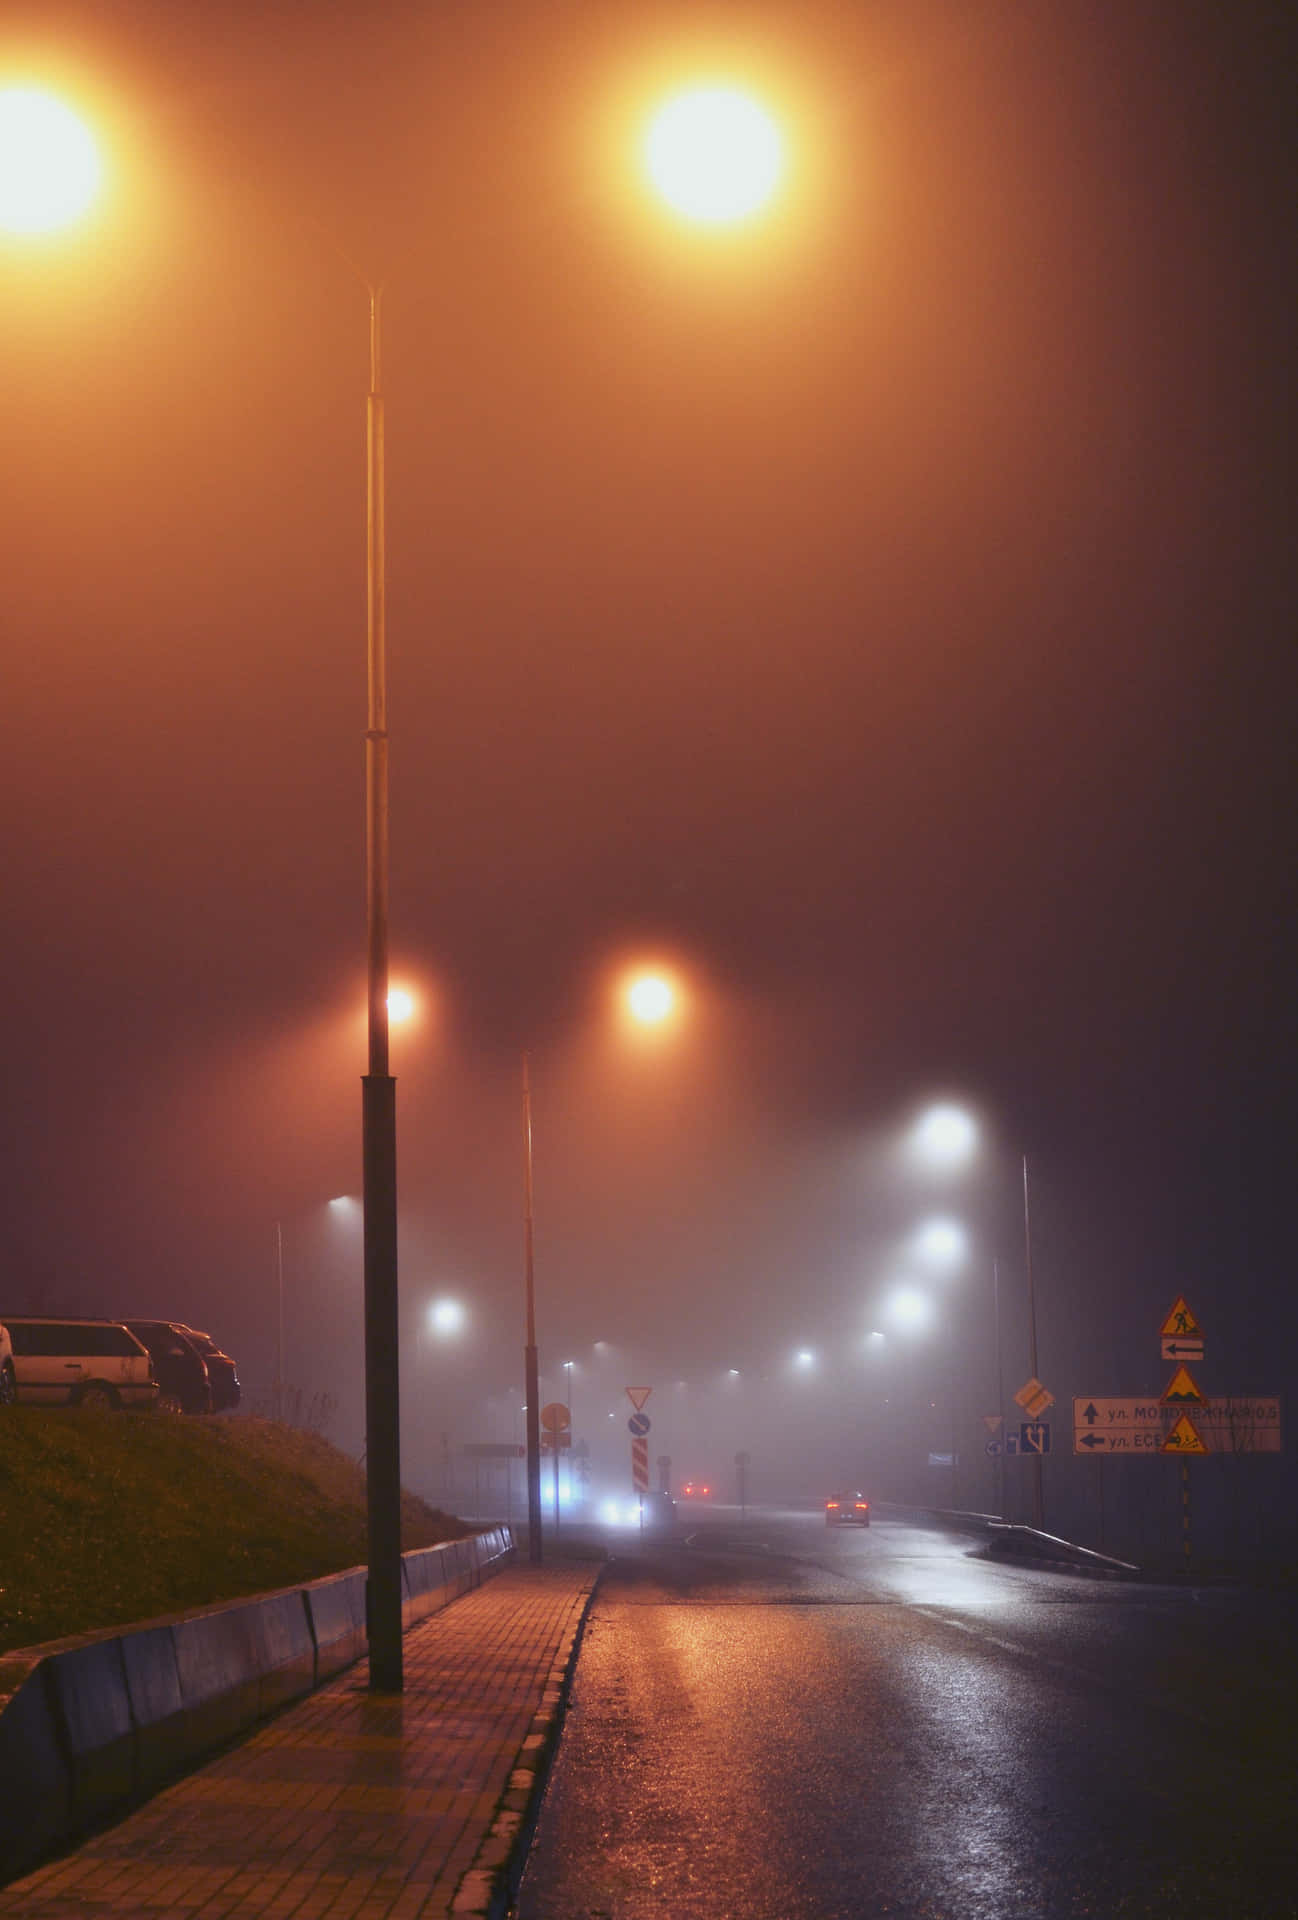 Foggy Night Street Lamps Wallpaper